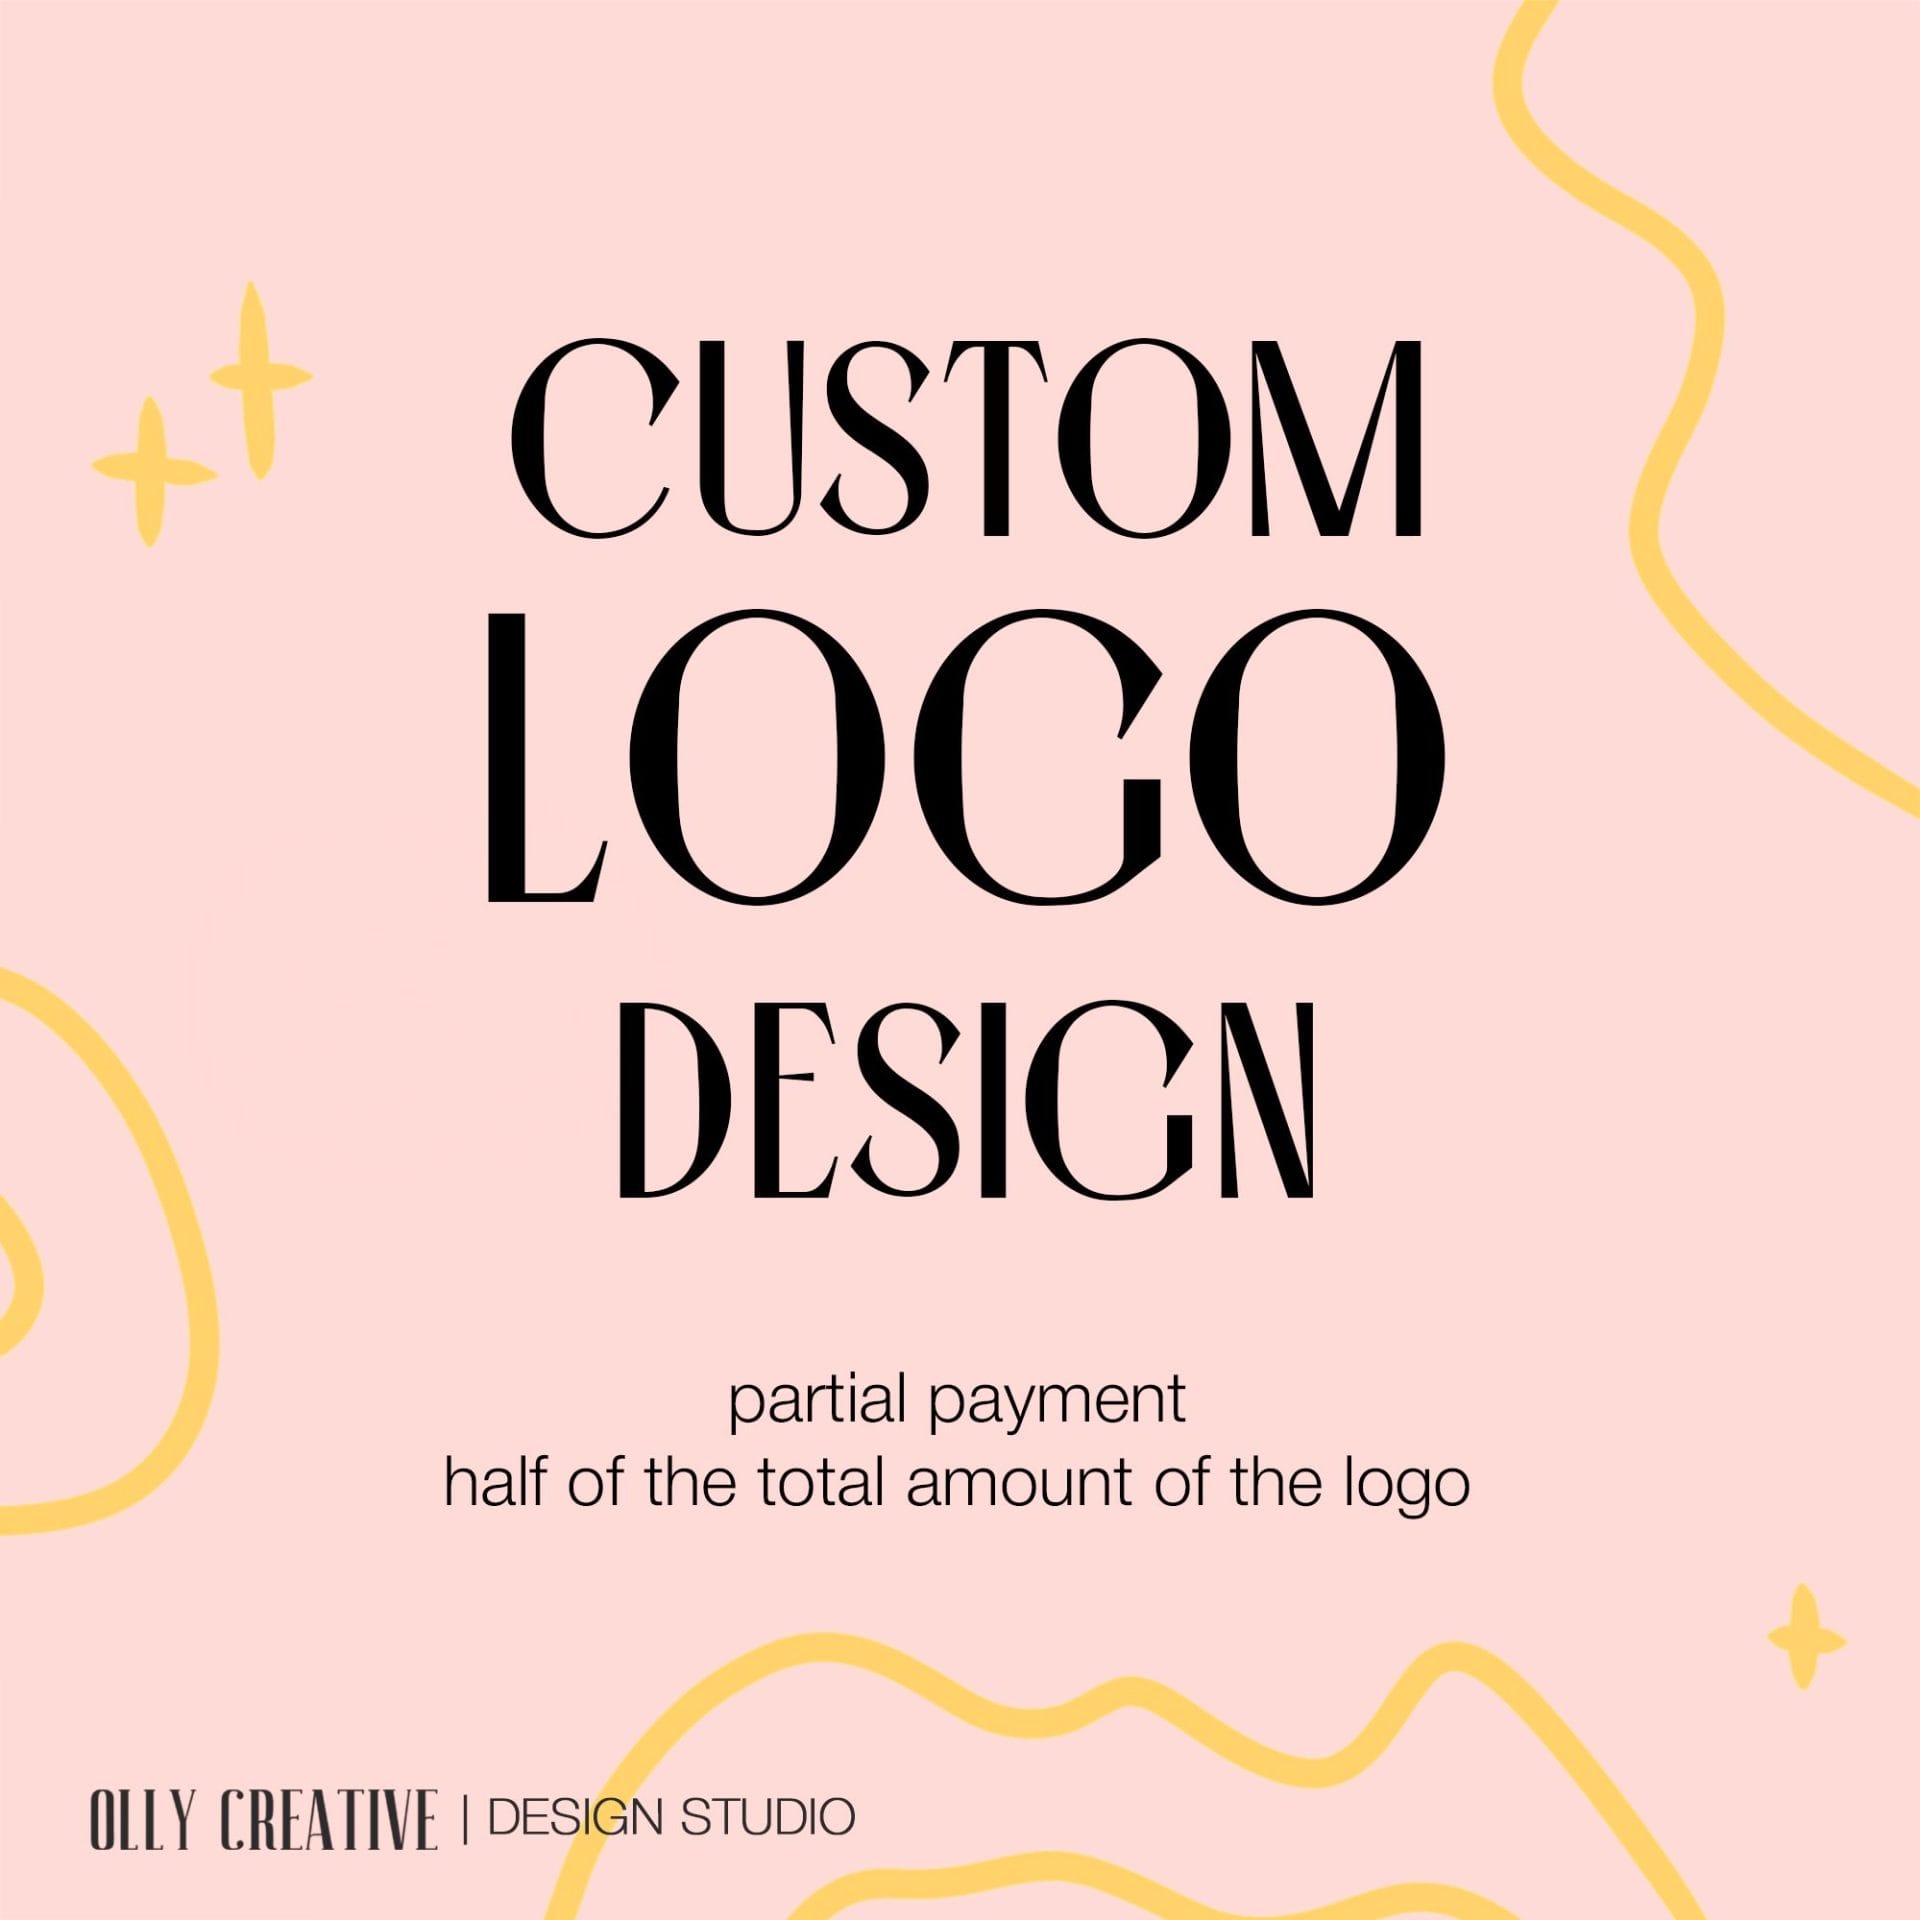 Custom logo design